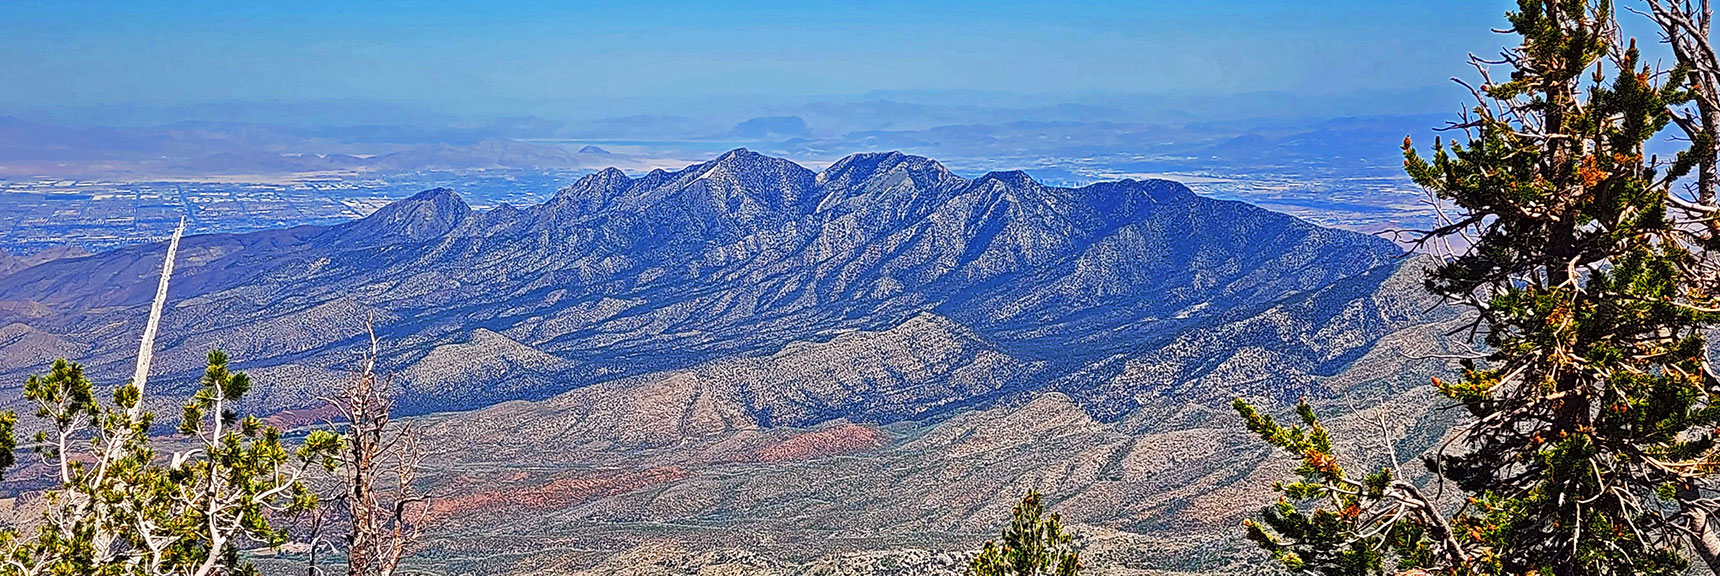 La Madre Mountains, Vegas Valley Background. | Fletcher Canyon to Harris Mountain Summit | Mt Charleston Wilderness, Nevada